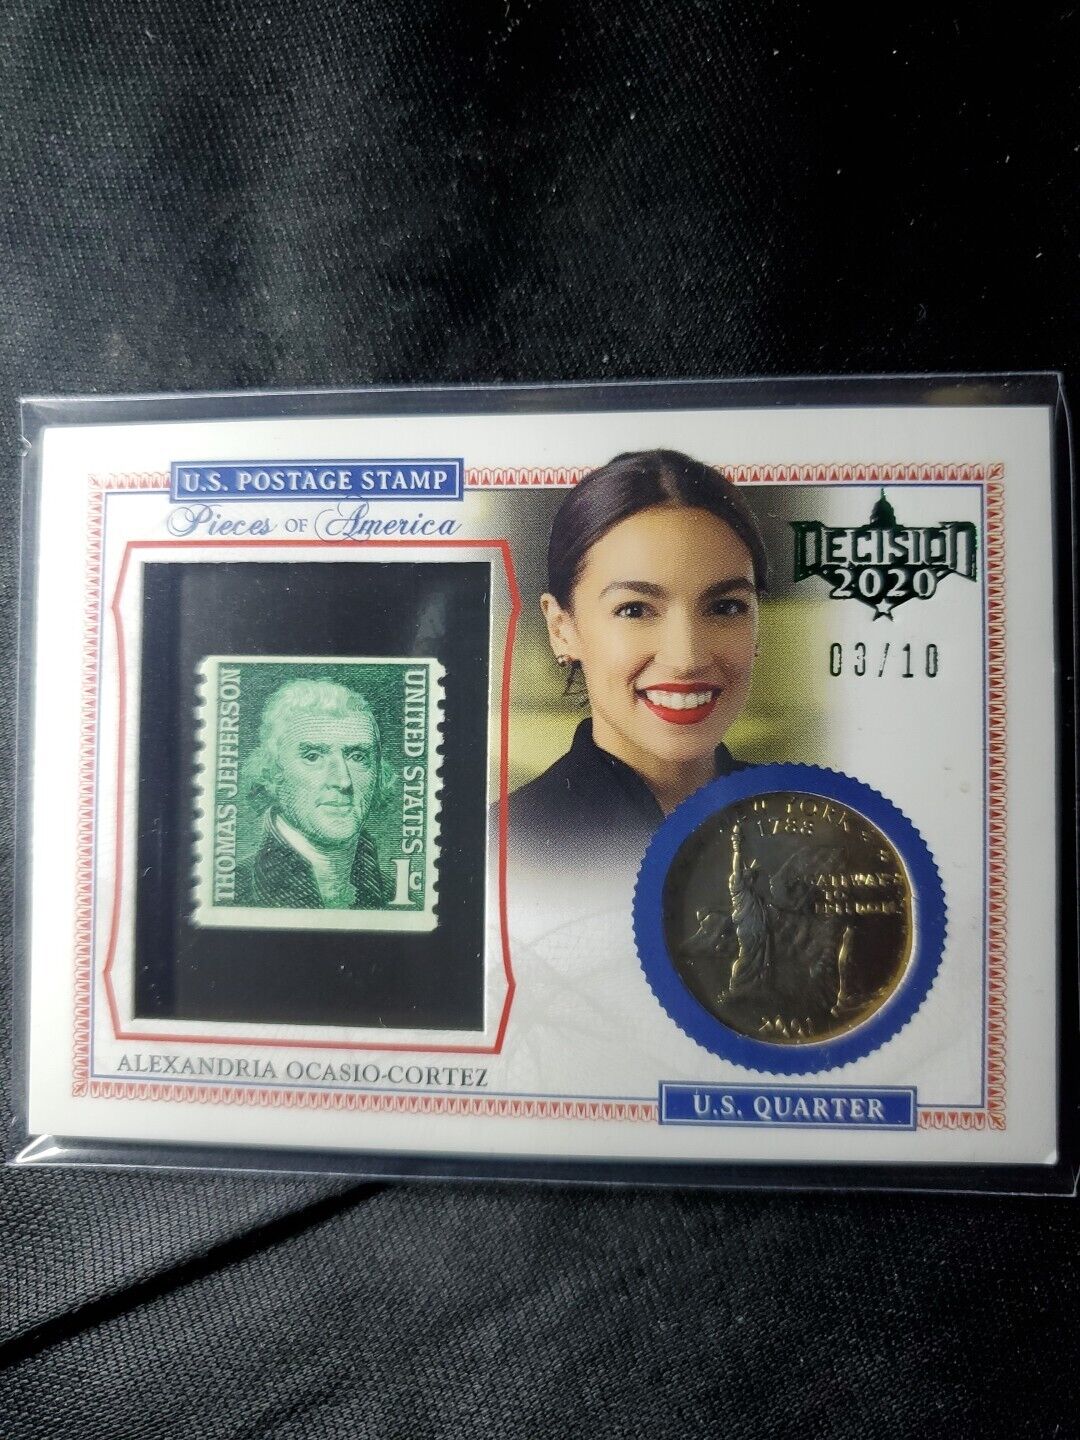 2020 Decision Pieces of America Alexandria Ocasio-Cortez  Coin Stamp 03/10